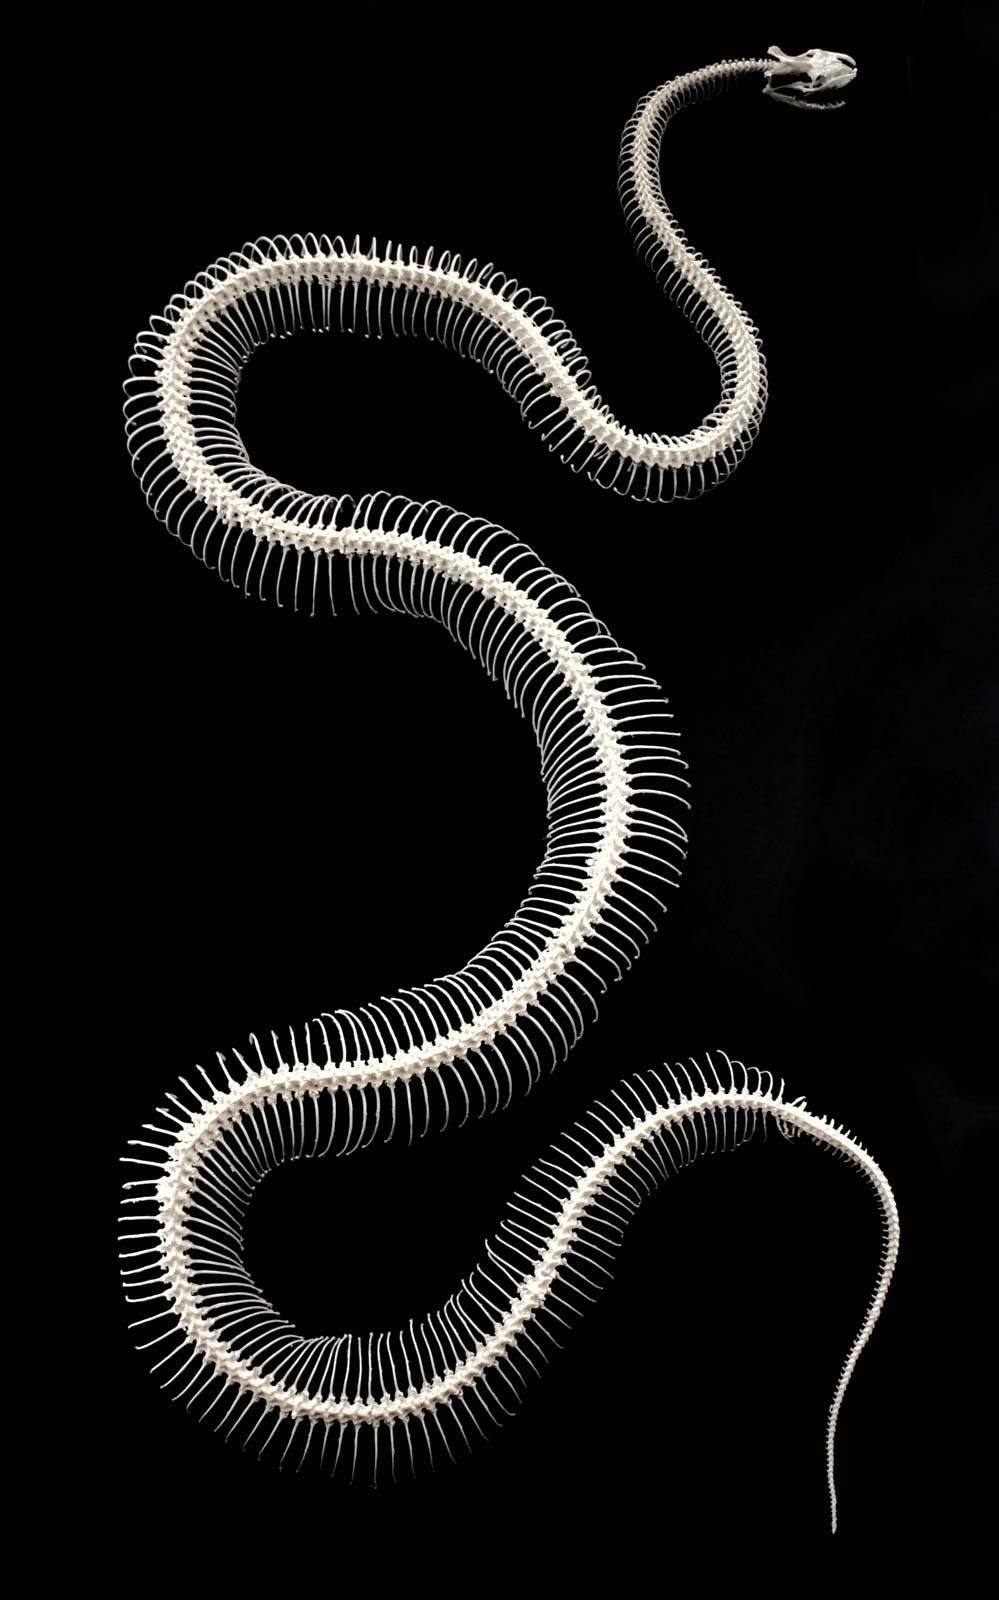 Anatomy Of A Worm Snake